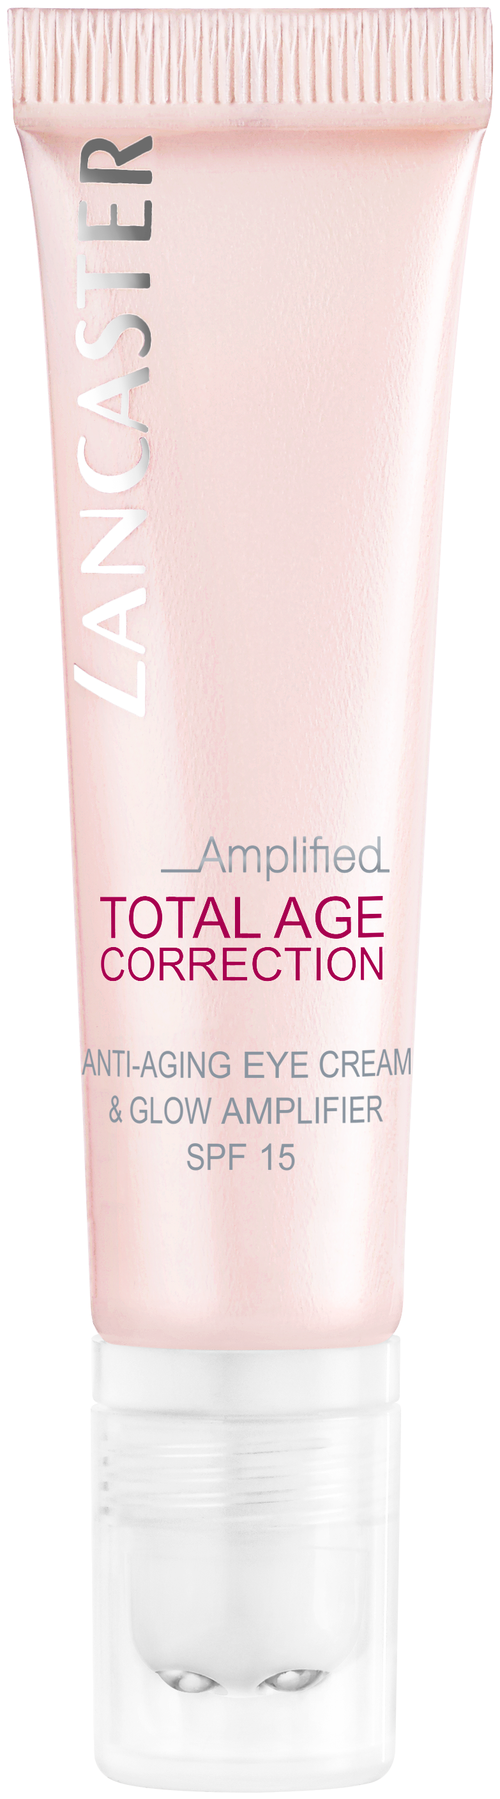 Lancaster Крем Total Age Correction Amplified Anti-Aging Eye Cream & Glow Amplifier SPF15 для кожи вокруг глаз, 15 мл